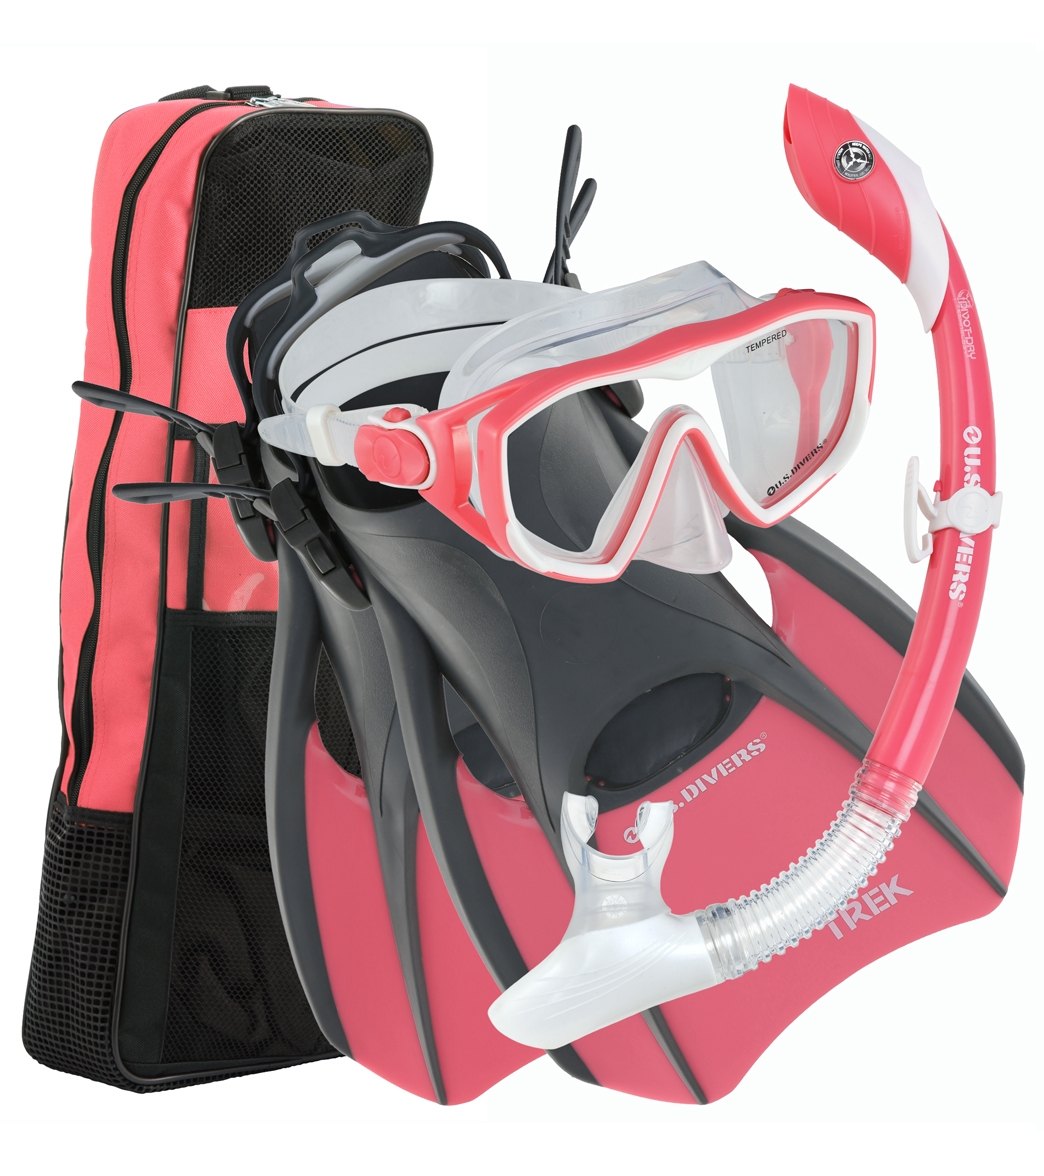 U.S. Divers women's diva lx mask island dry snorkel trek fins set with gear bag - bright pink/black medium 8-11 size medium plastic/rubber/silicone